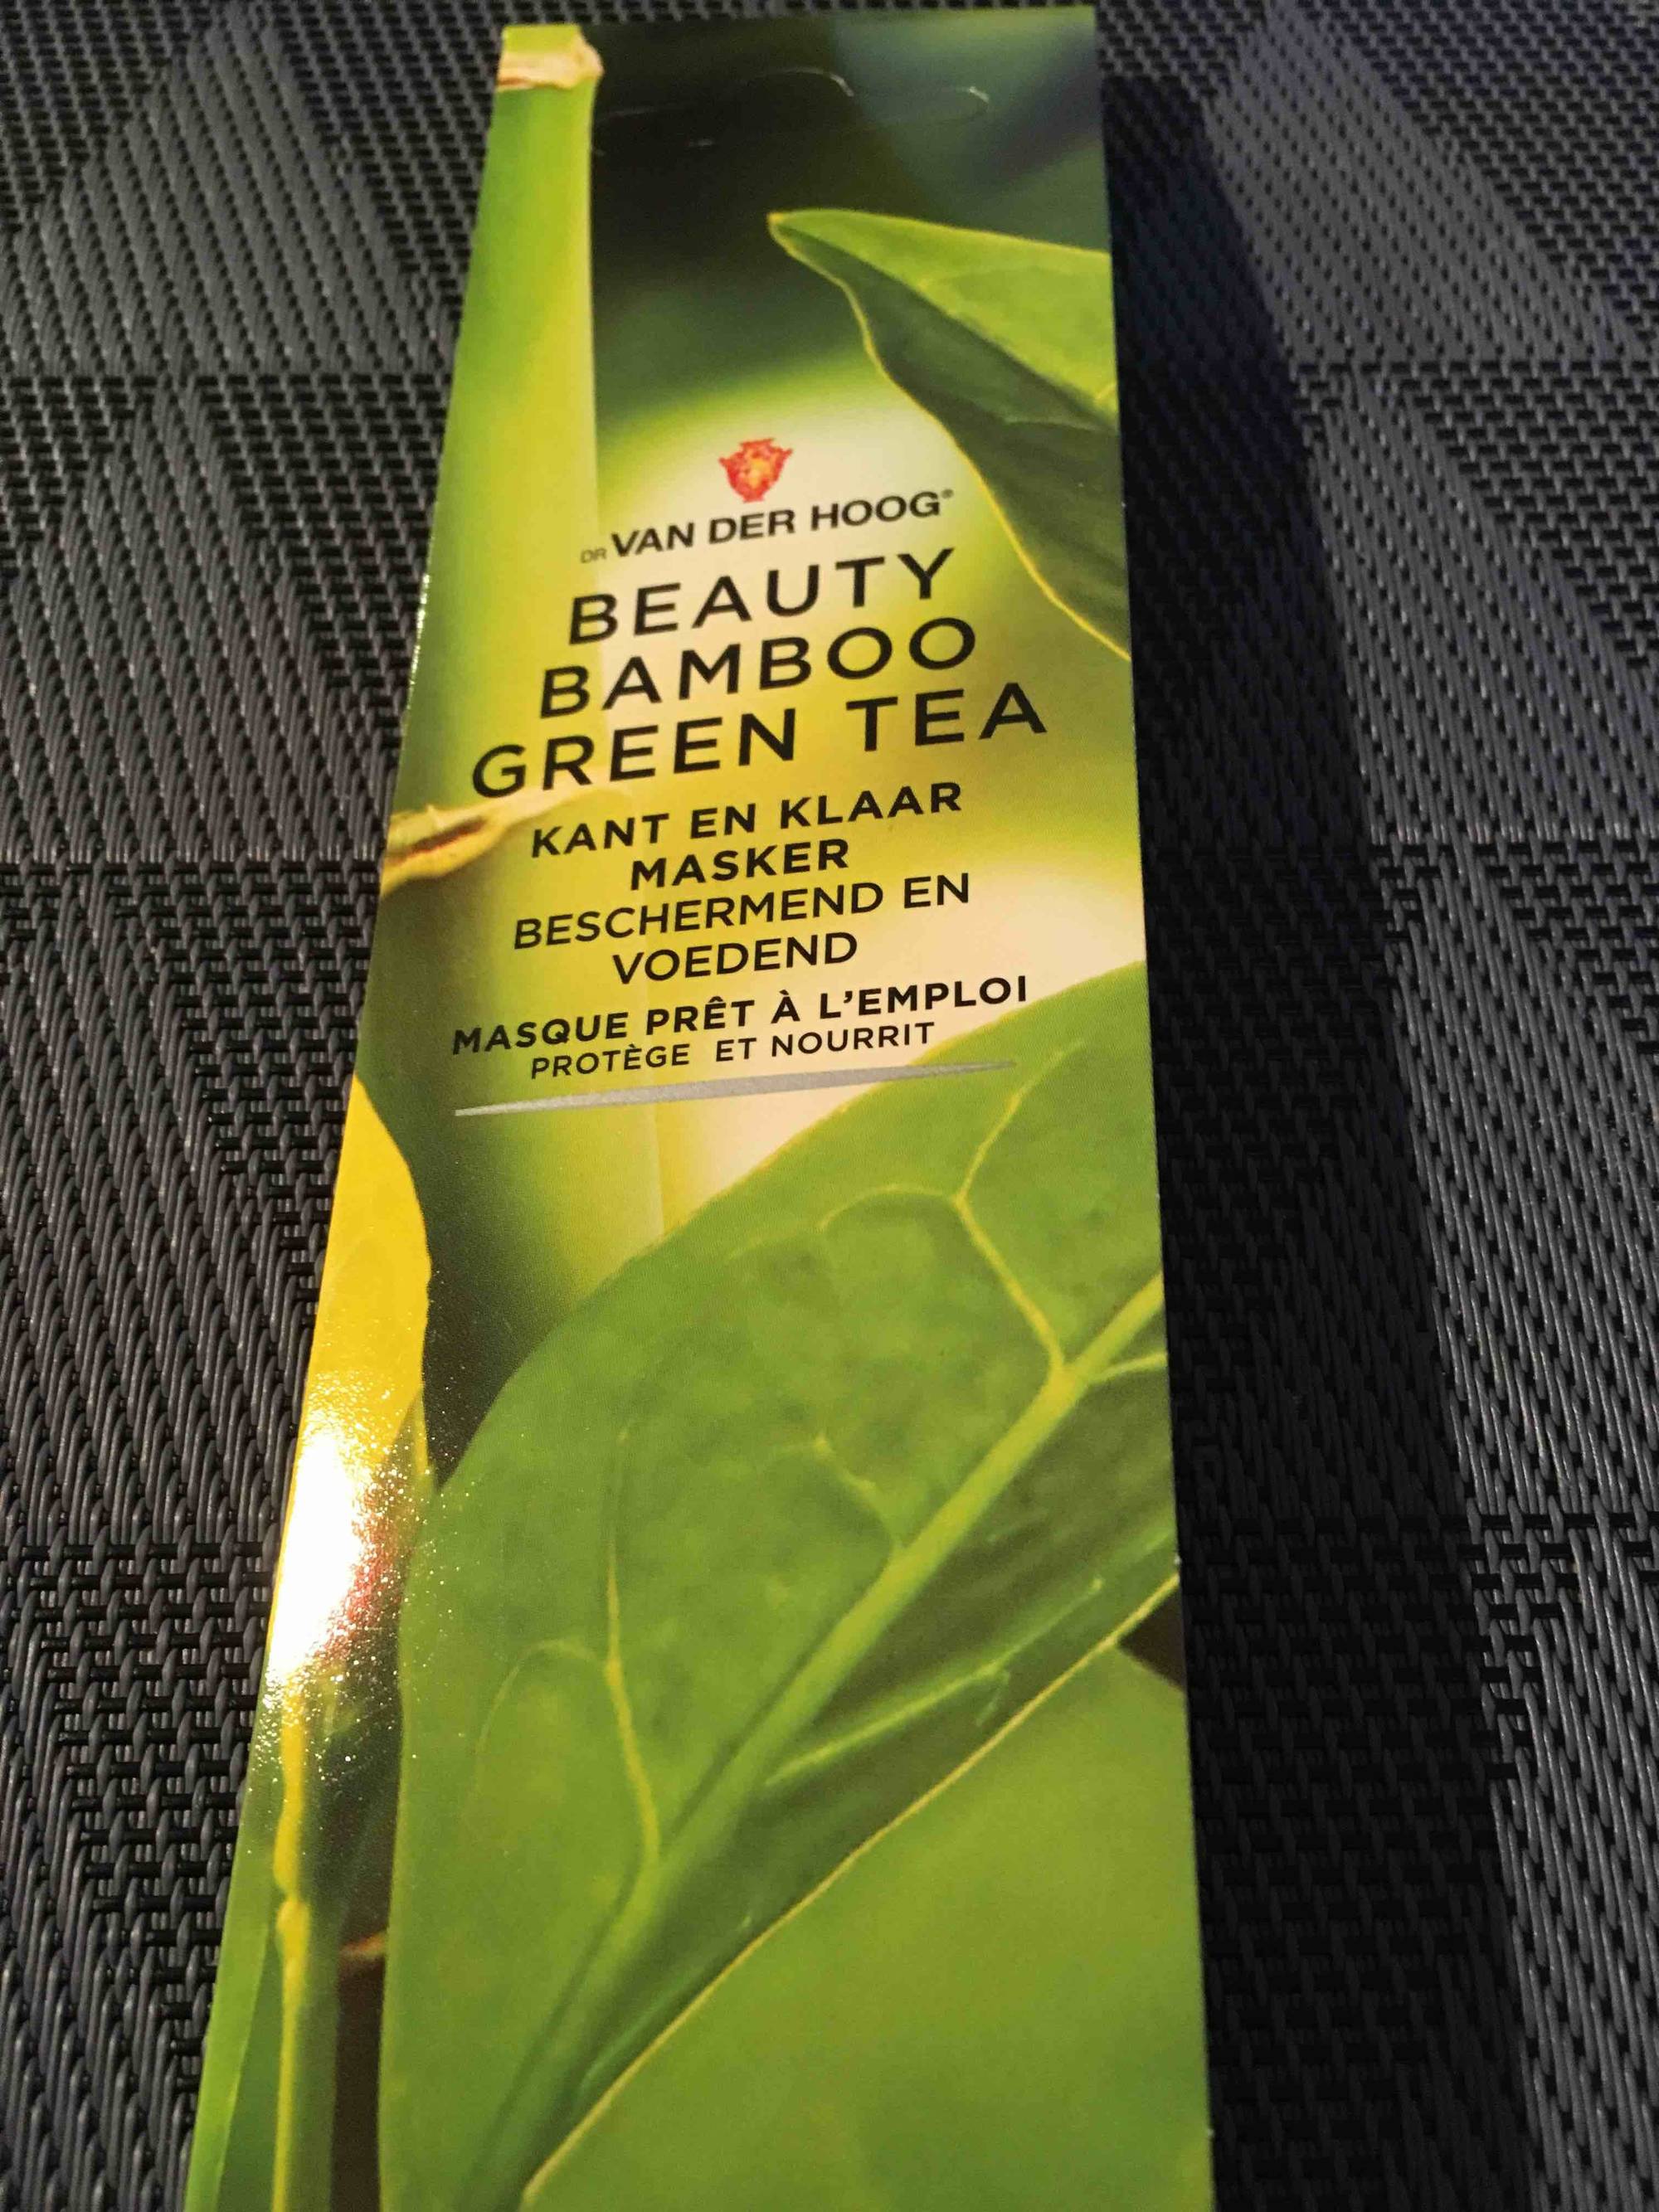 DR VAN DER HOOG - Beauty bamboo green tea - Masque prêt à l'emploi